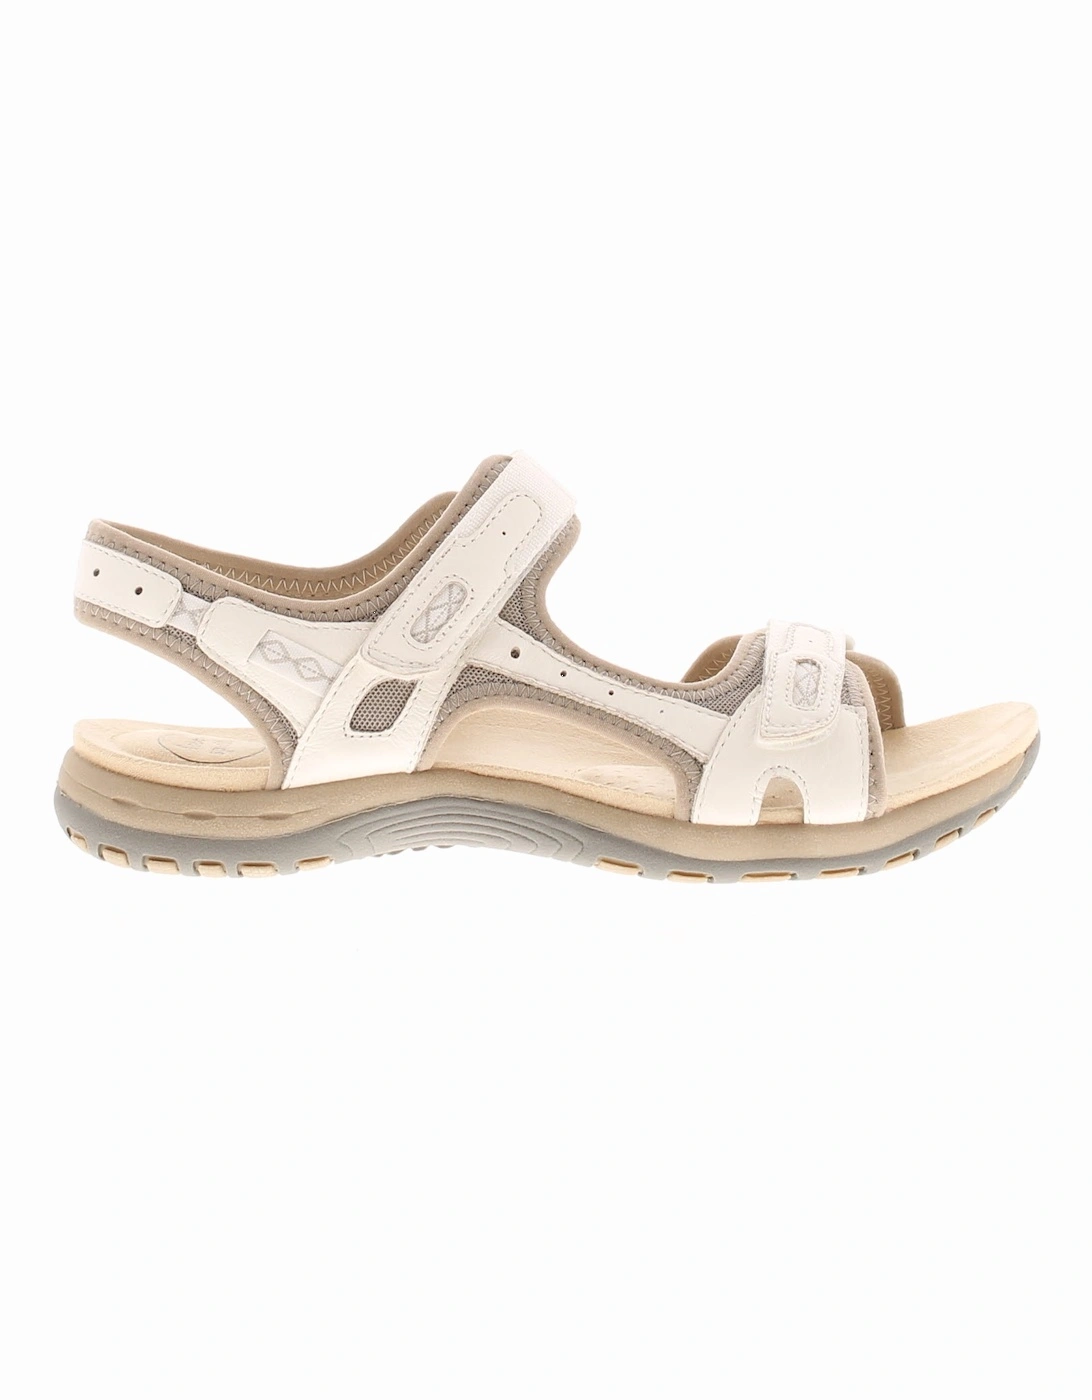 Free Spirit Womens Sandals Walking Frisco Touch Fastening white UK Size